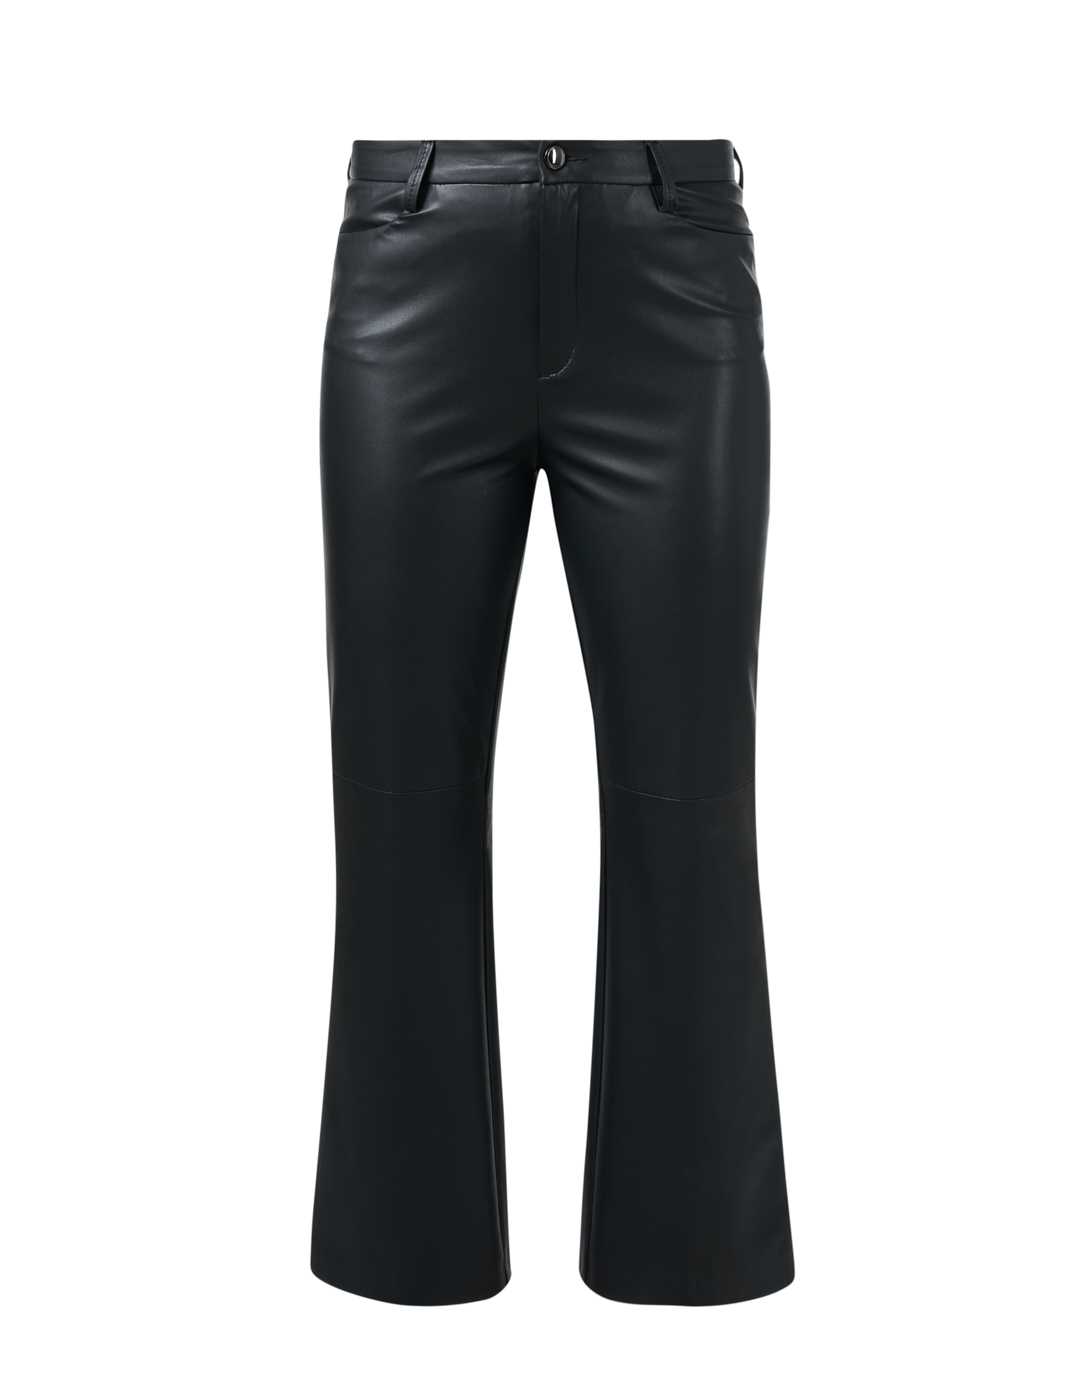 Leather Jeans Black MAC Aida Kick Pant | Flare Faux